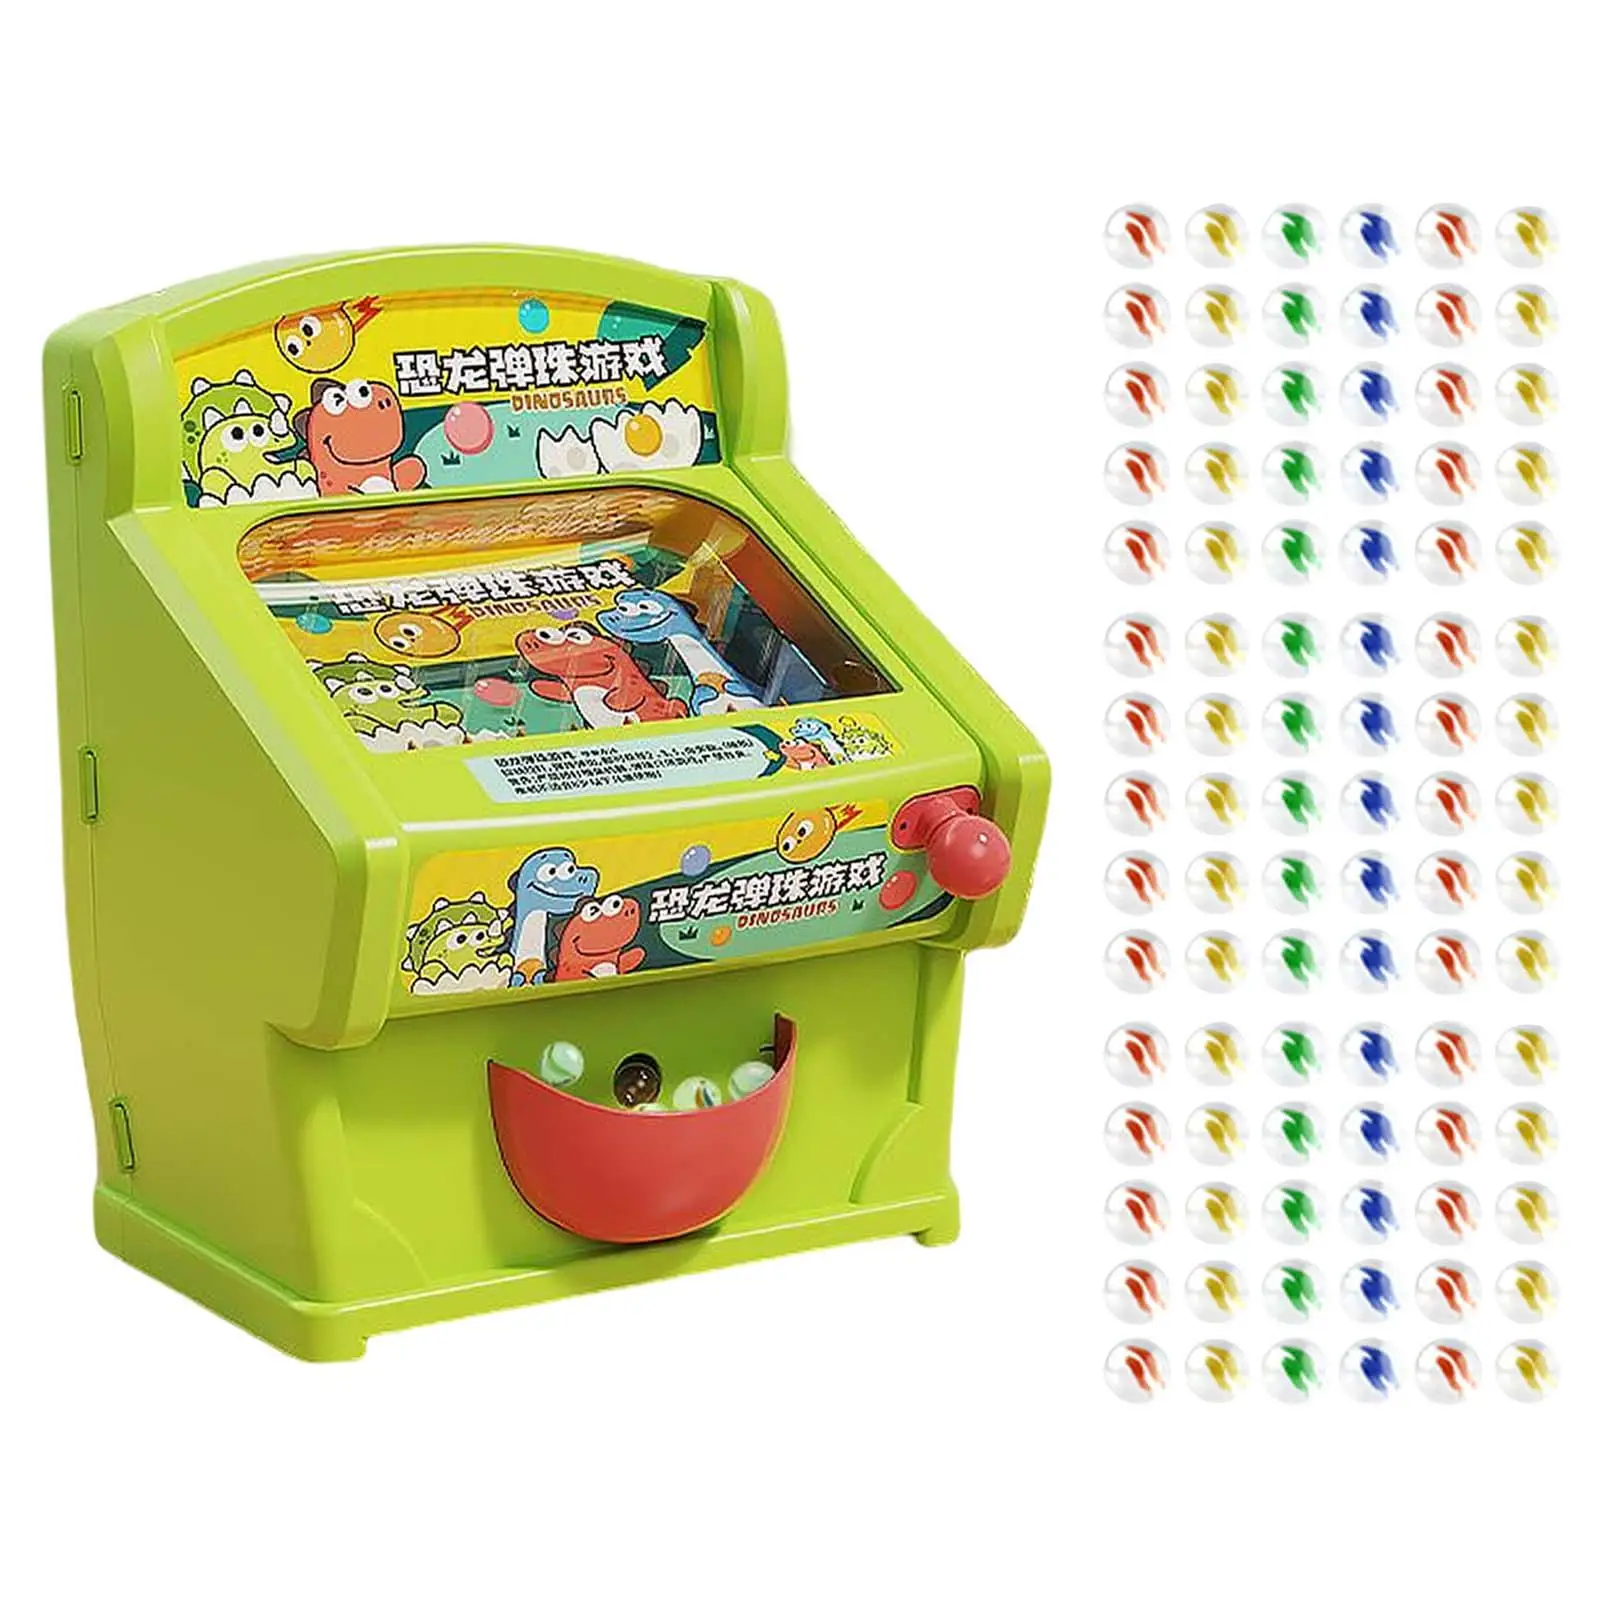 Dinosaur Marble Montessori Developmental Toy Electronic Arcade Machine Interaction Game for Birthday Gift Kids Ages 3 4 5 6